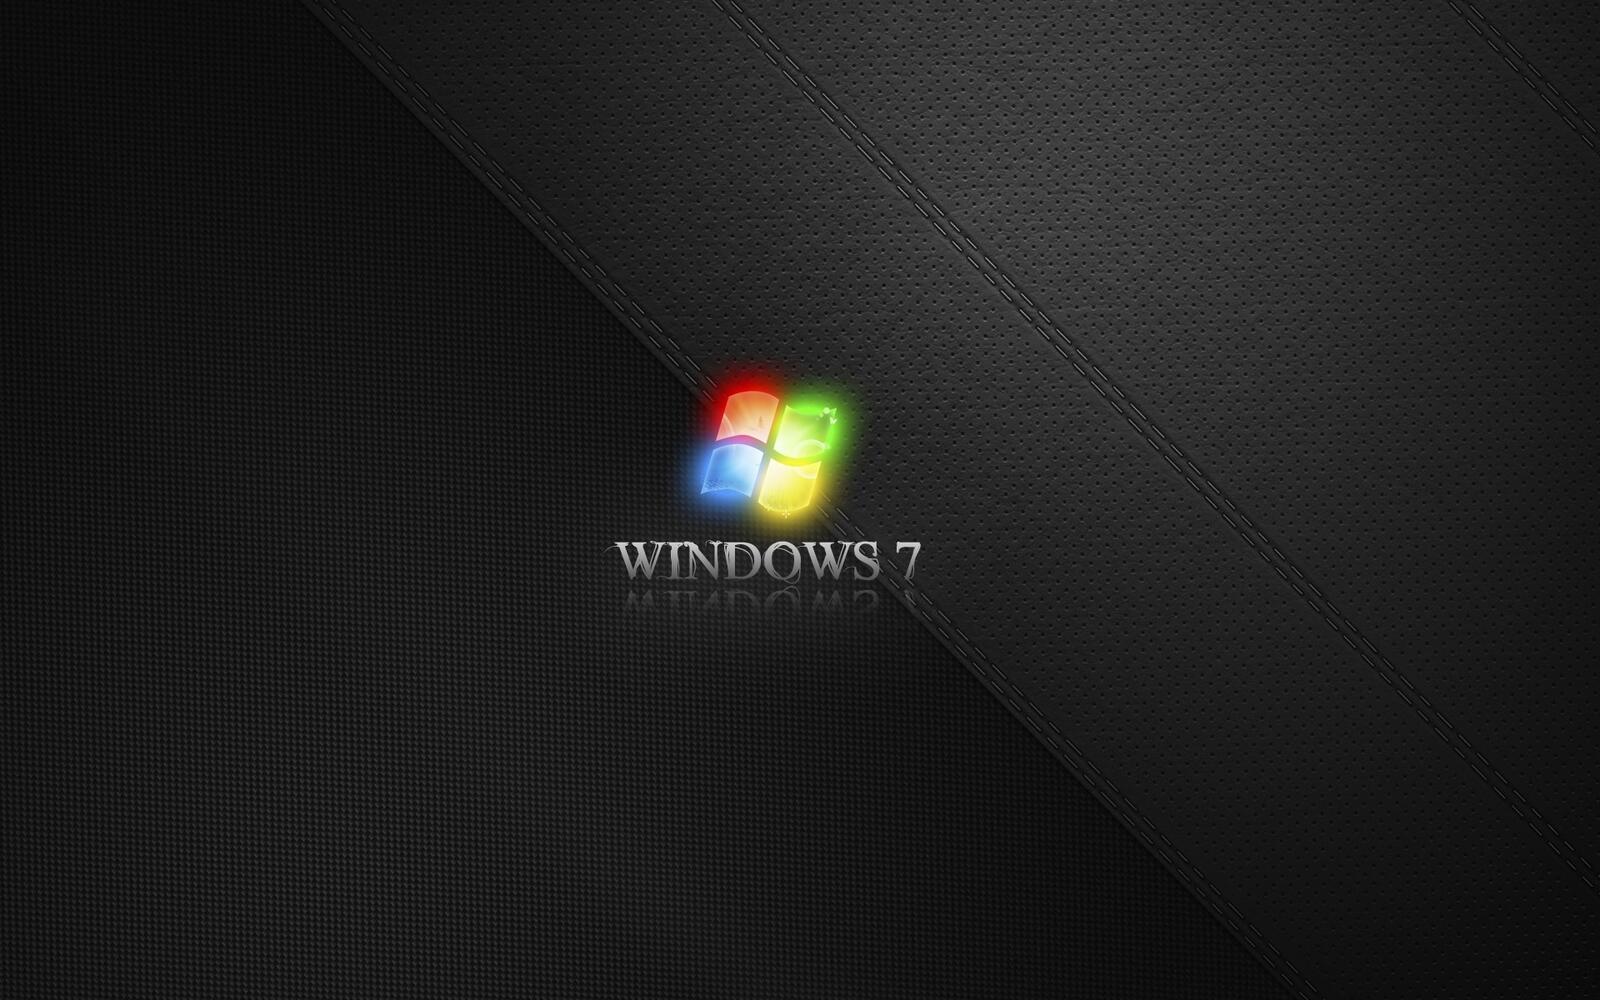 Wallpapers screensaver logo windows 7 on the desktop